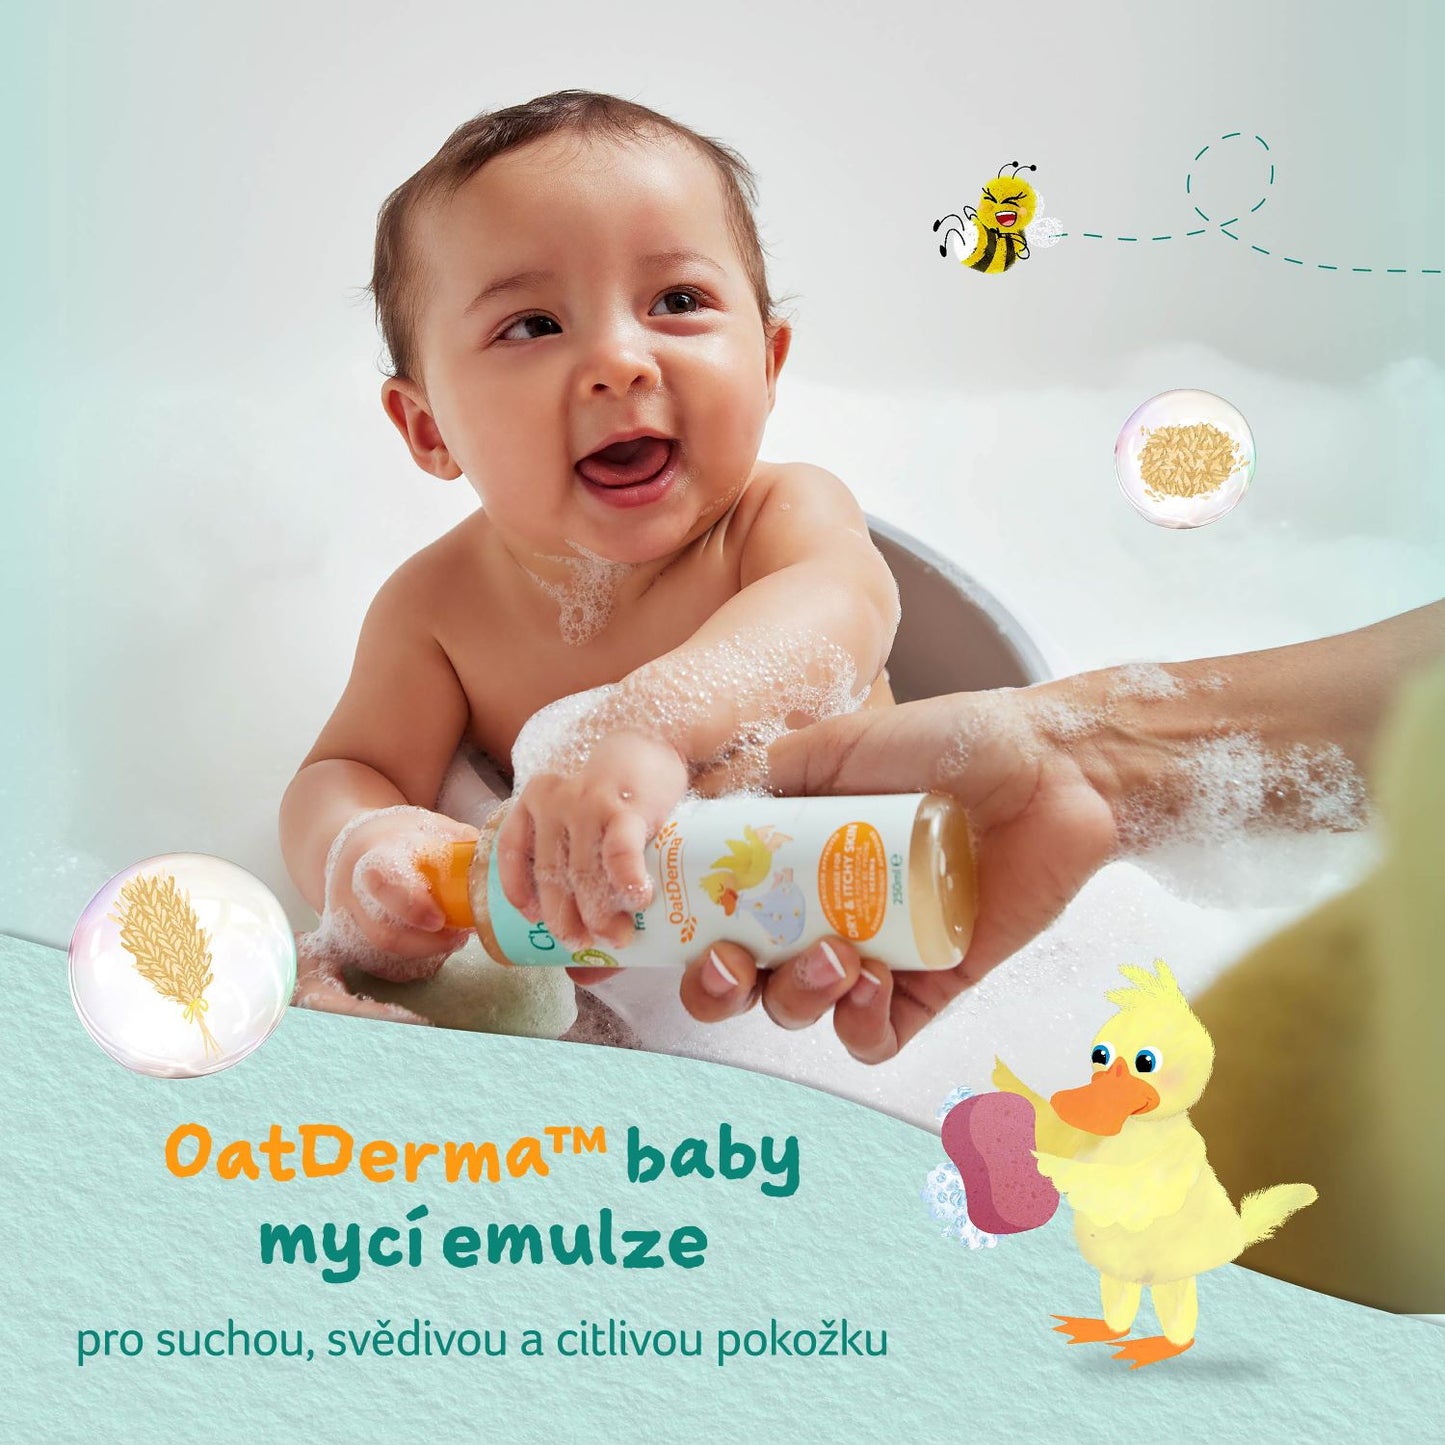 Childs Farm OatDerma™ baby wash fragrance-free